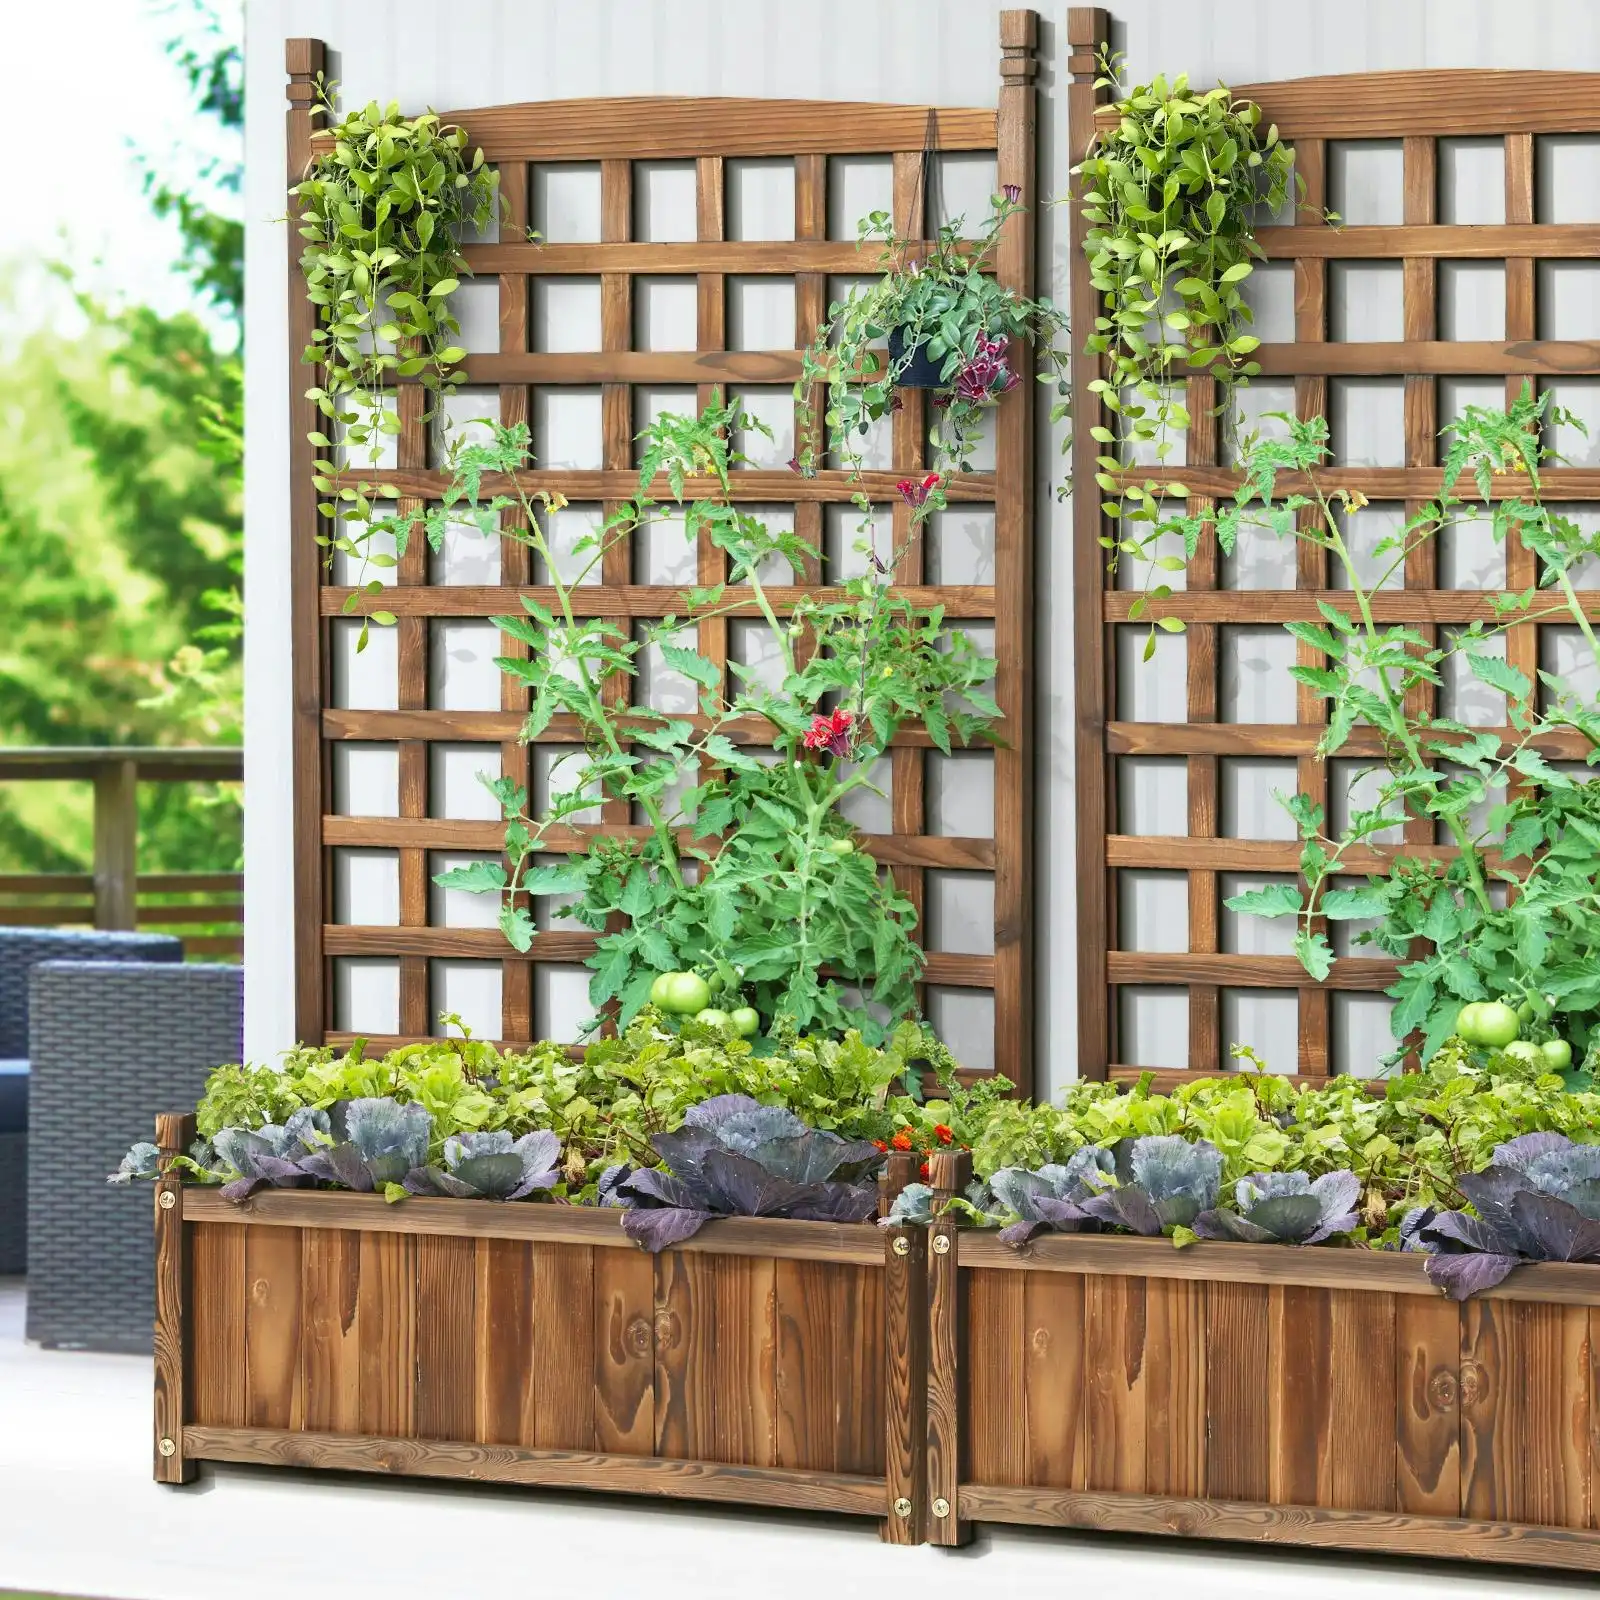 Livsip x2 Raised Garden Bed Wooden Planter Box Vegetables Outdoor Square